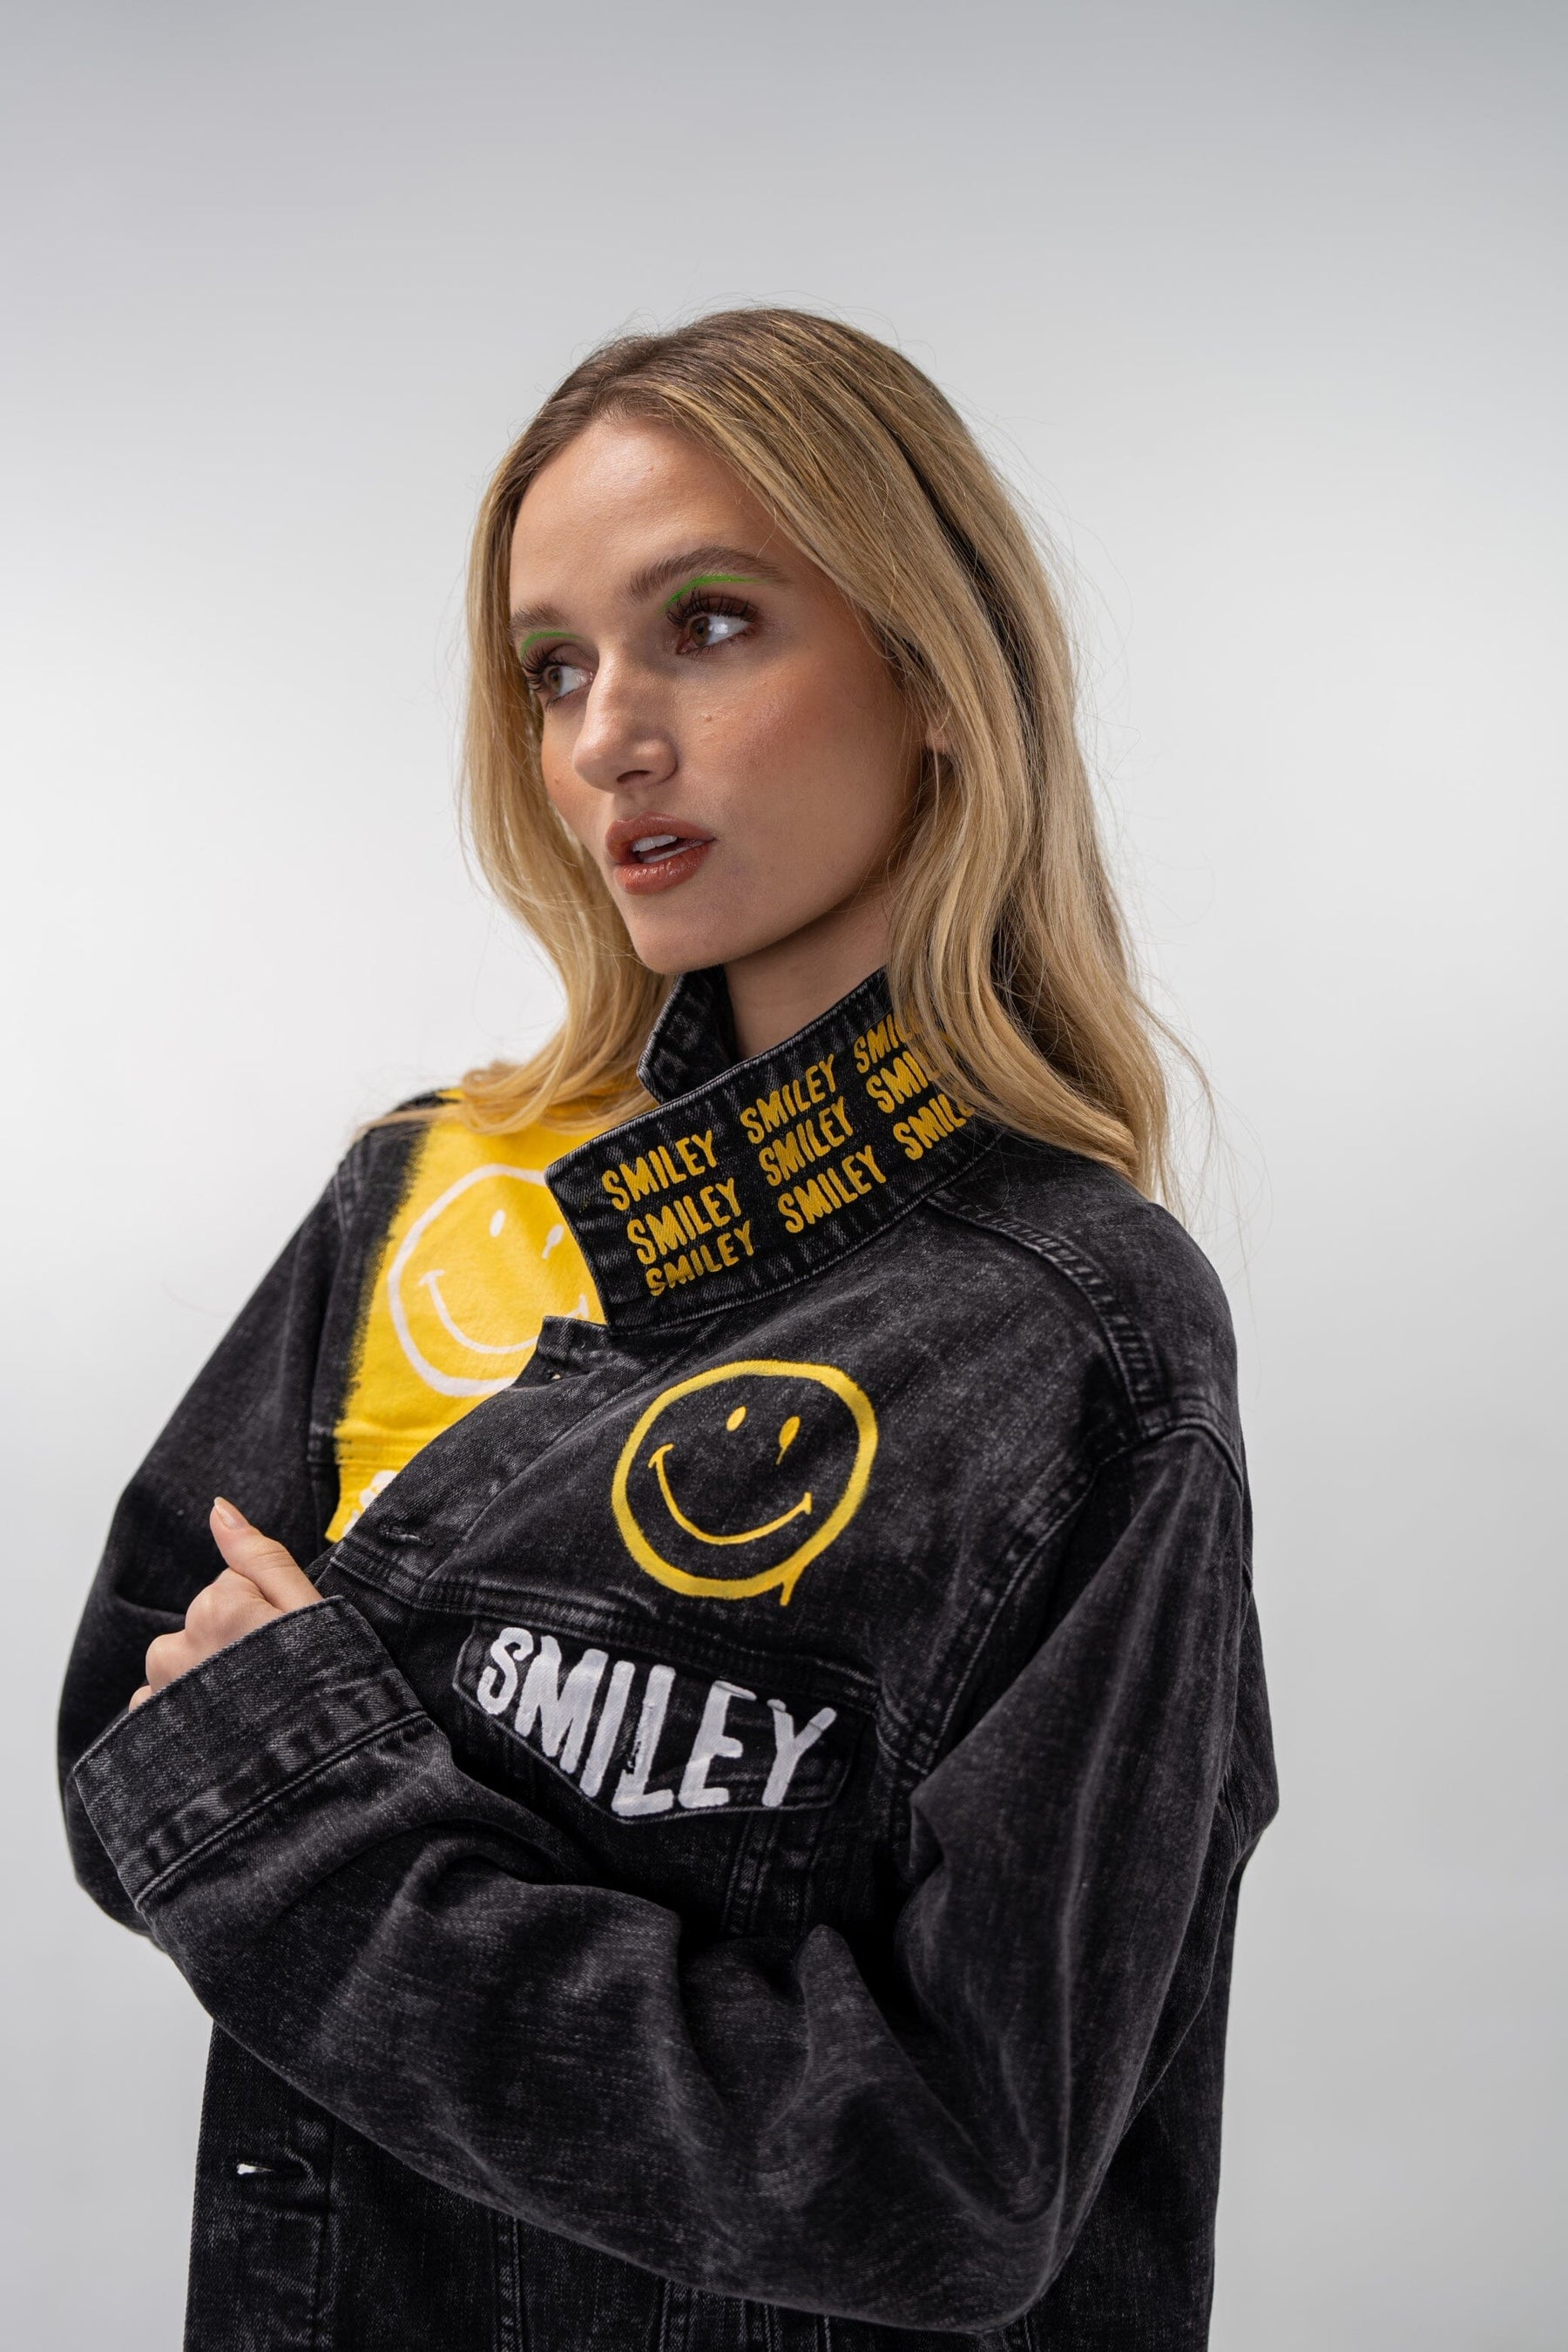 'The Smiley (Black) Denim' Painted Jacket